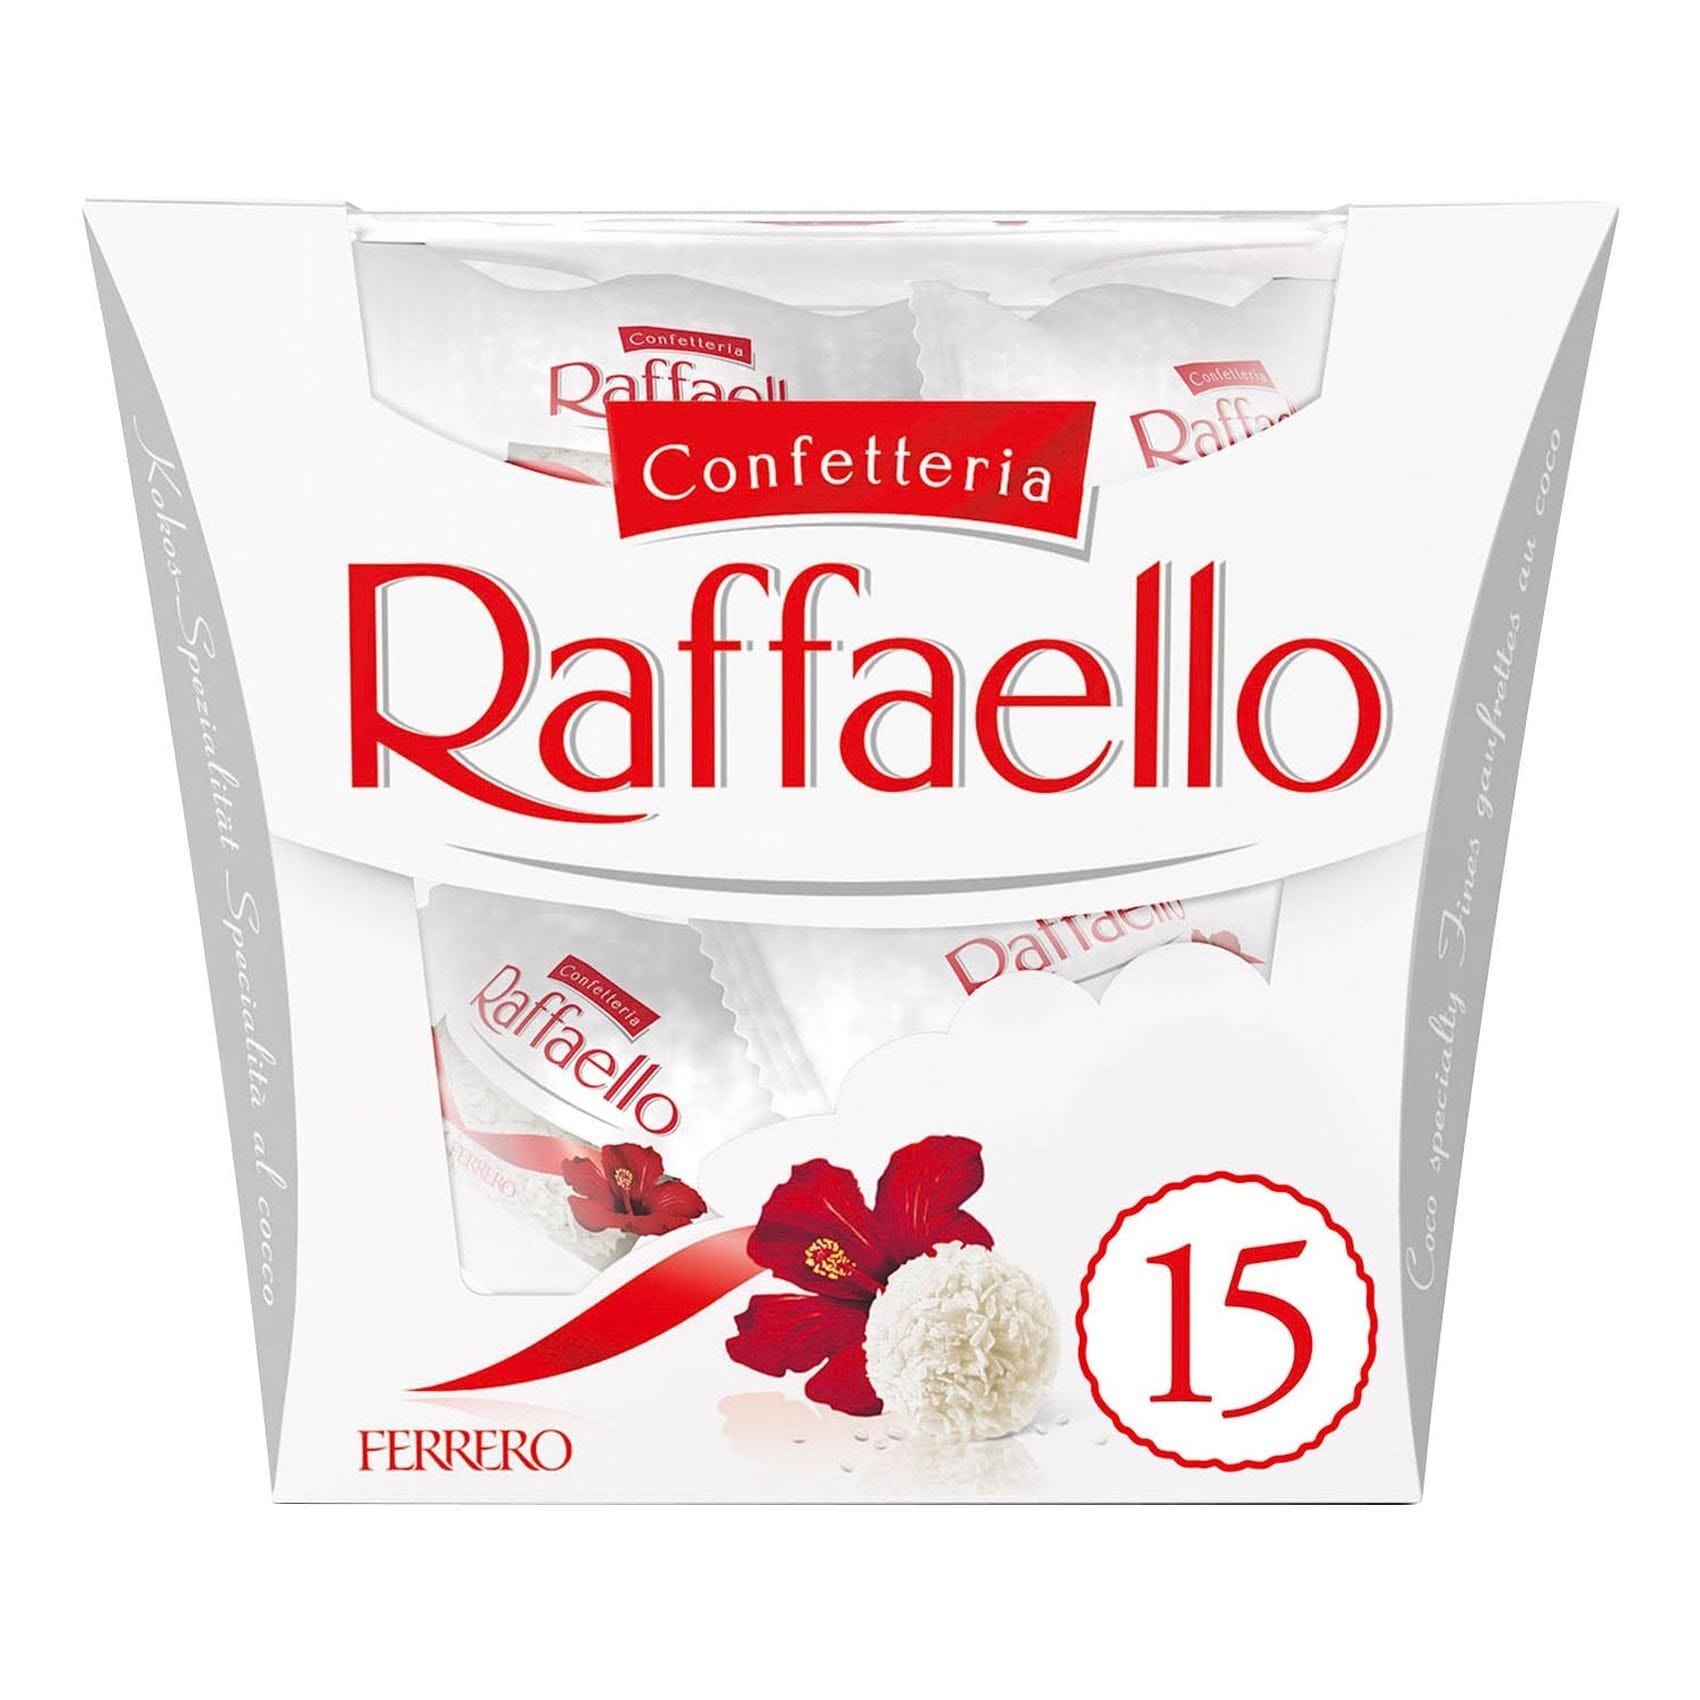 How To Make Ferrero Raffaello at Home 